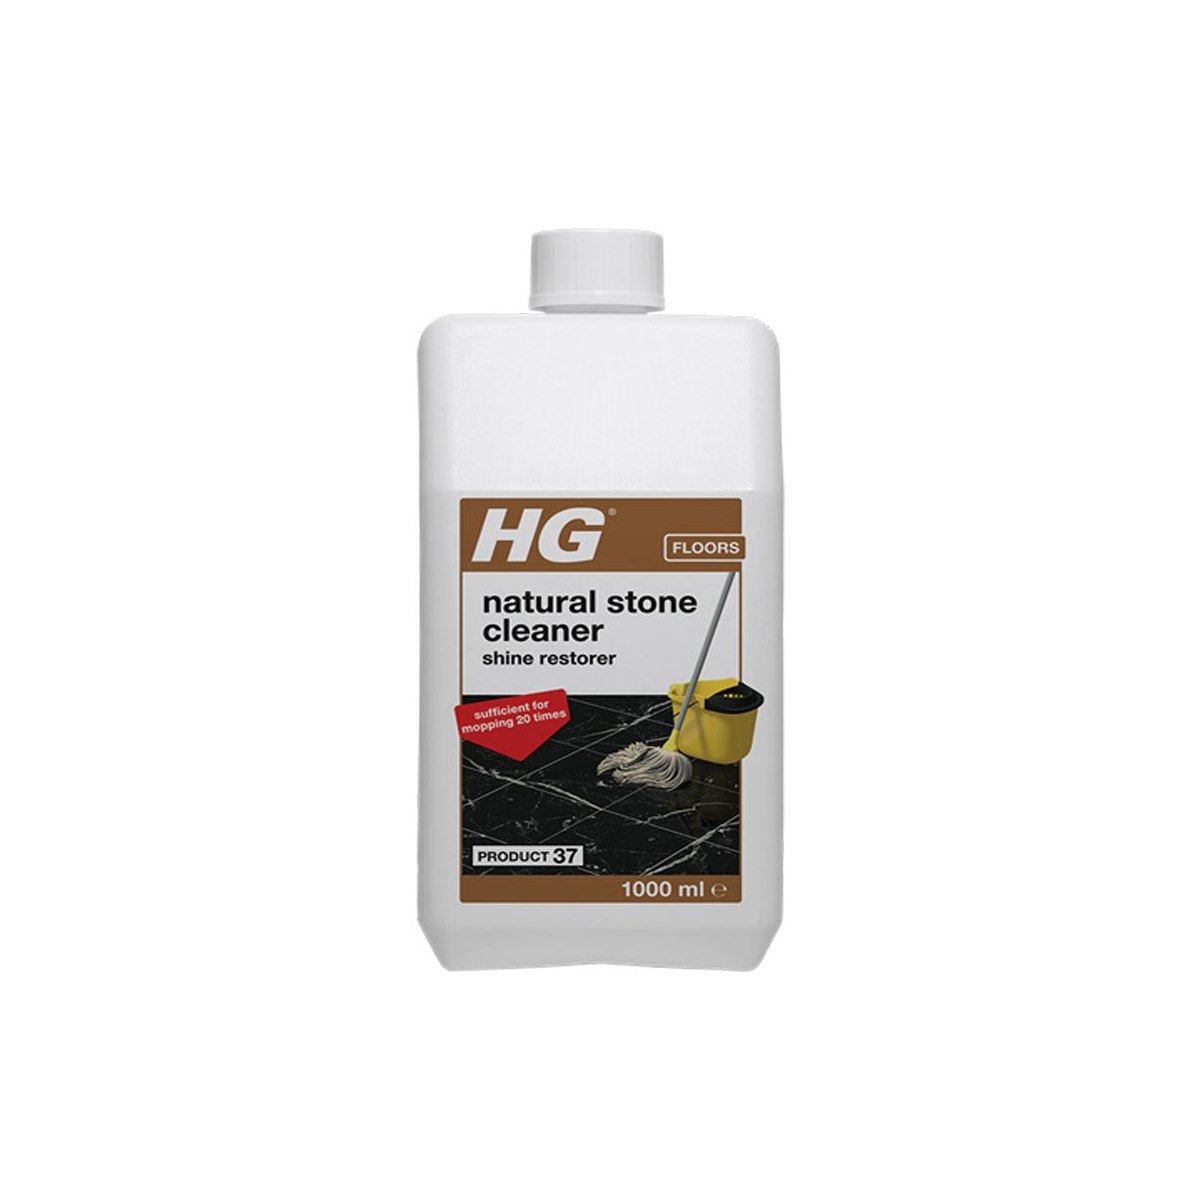 HG Natural Stone Cleaner Shine Restorer Product 37 1 Litre